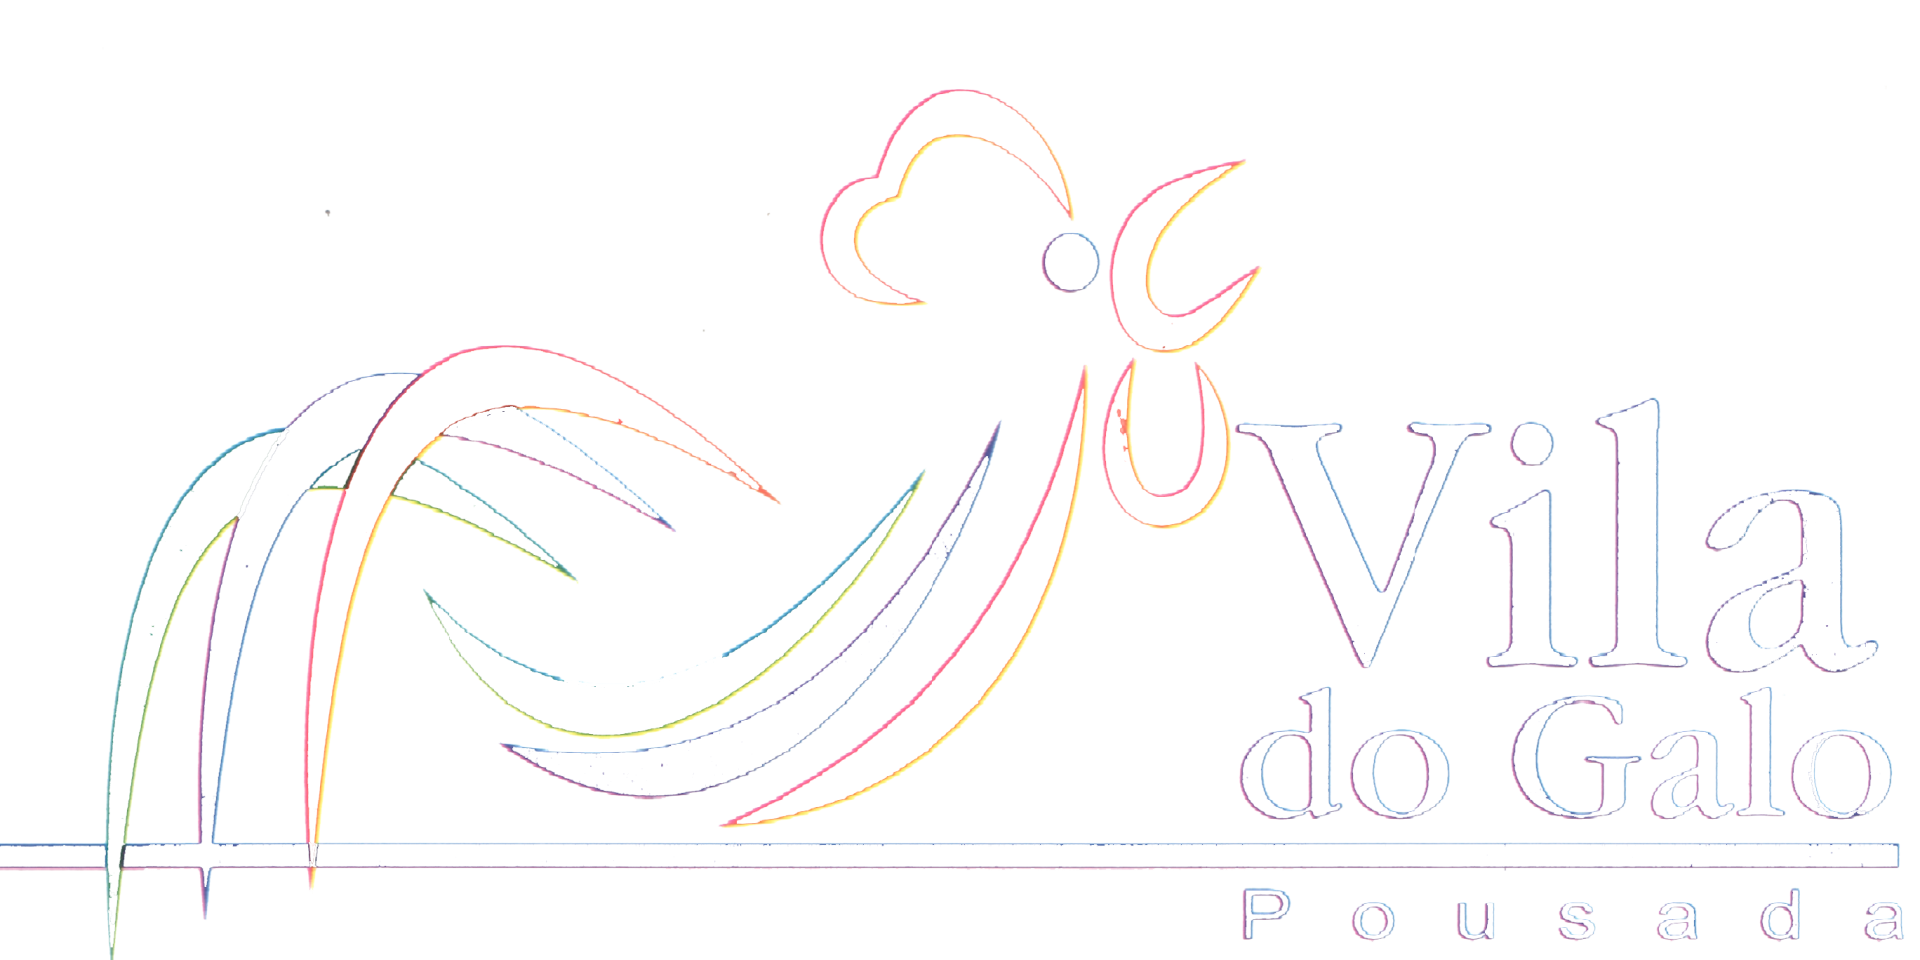 Logo_hotel